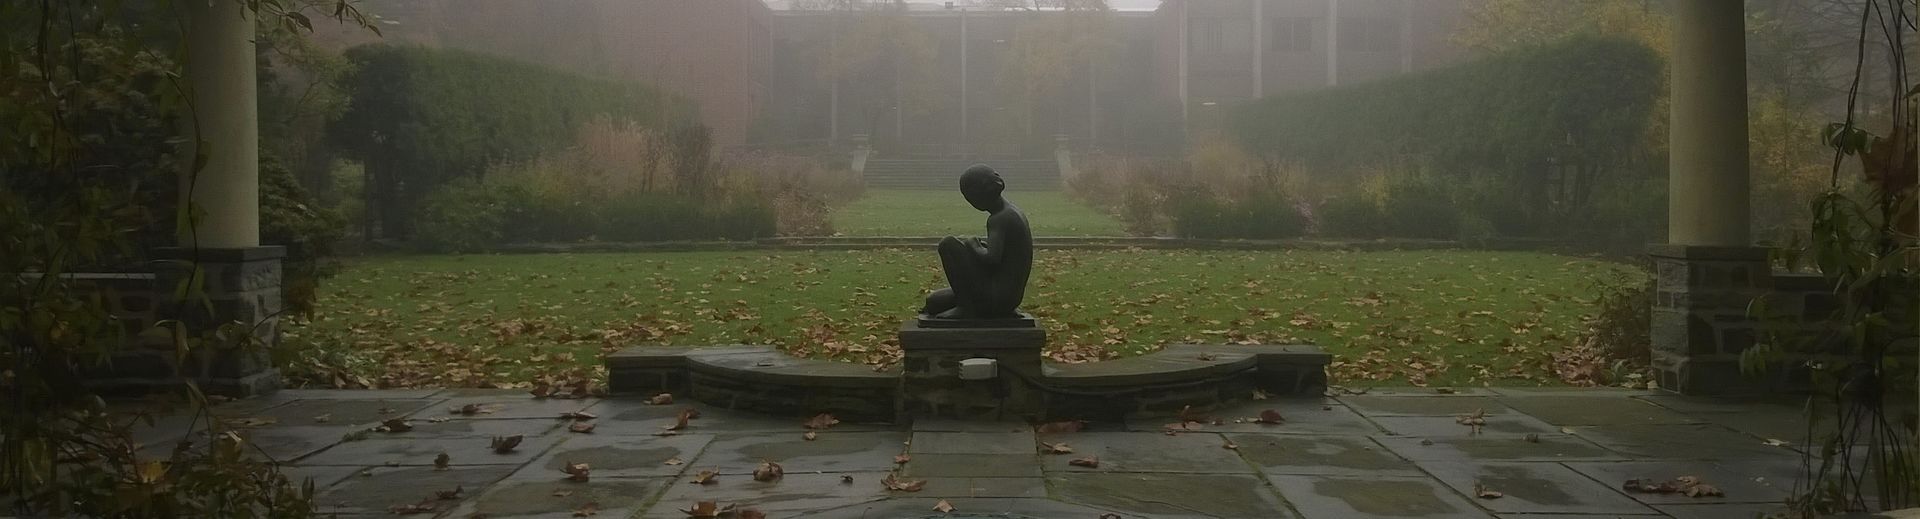 Bright Memorial in the fog